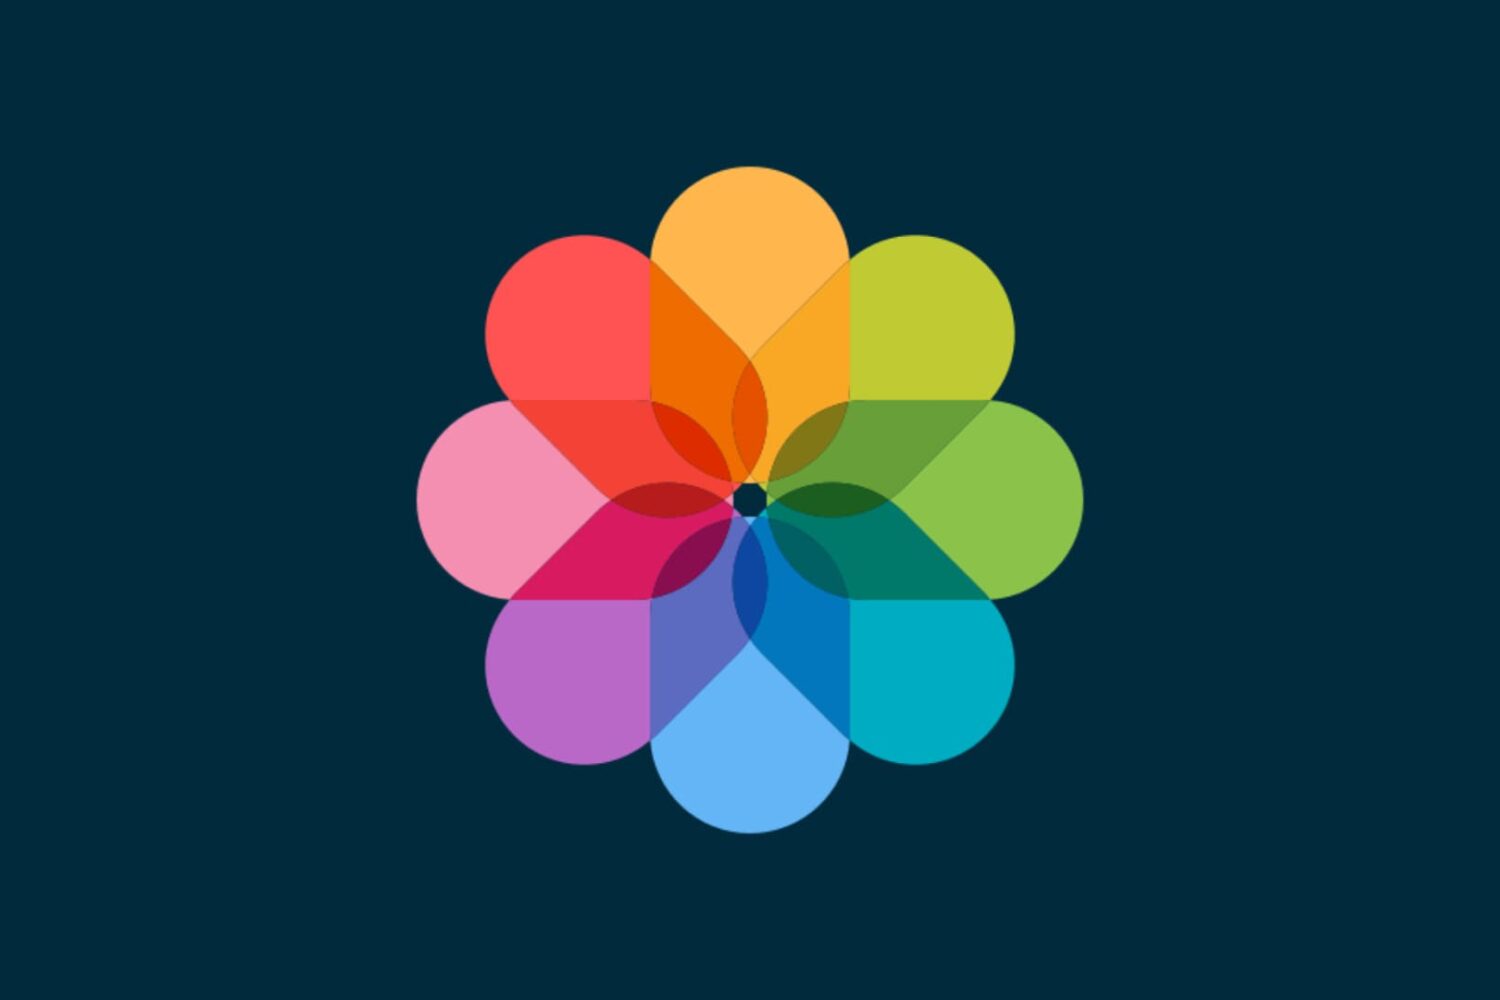 Apple Photos app icon on a dark background